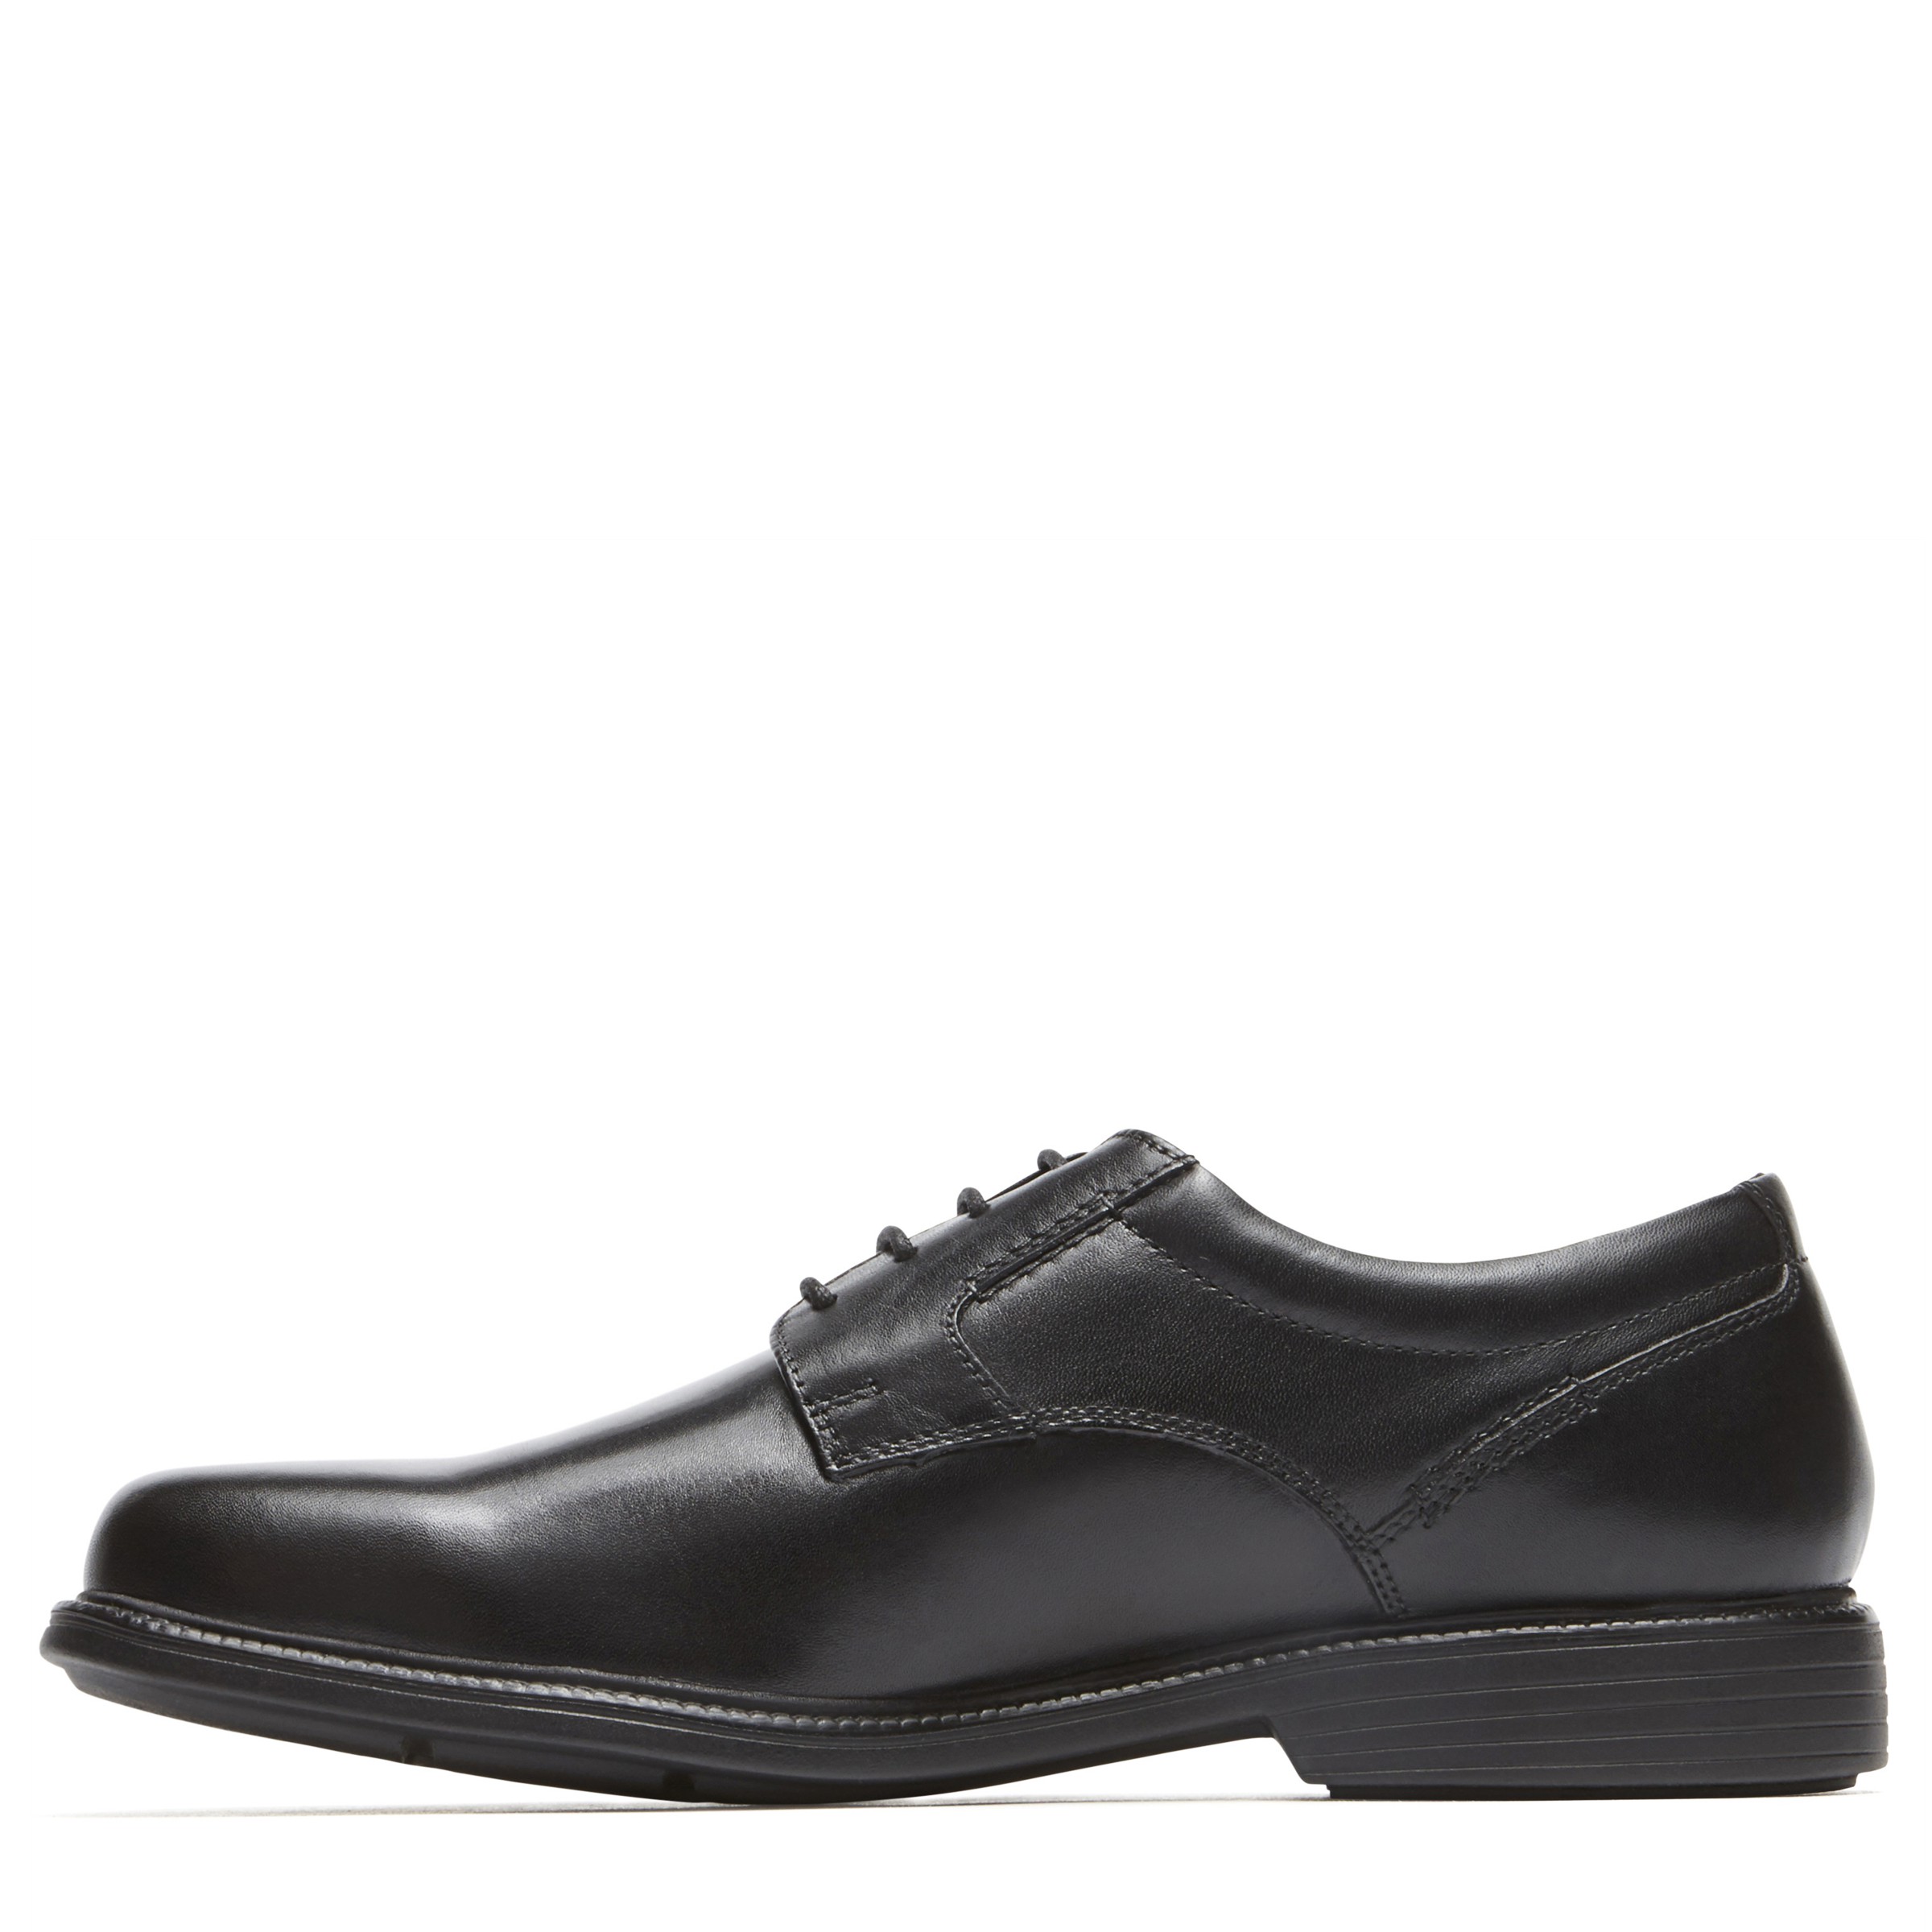 New Mens Rockport Black Charlesroad Plaintoe Leather Shoes Lace Up 